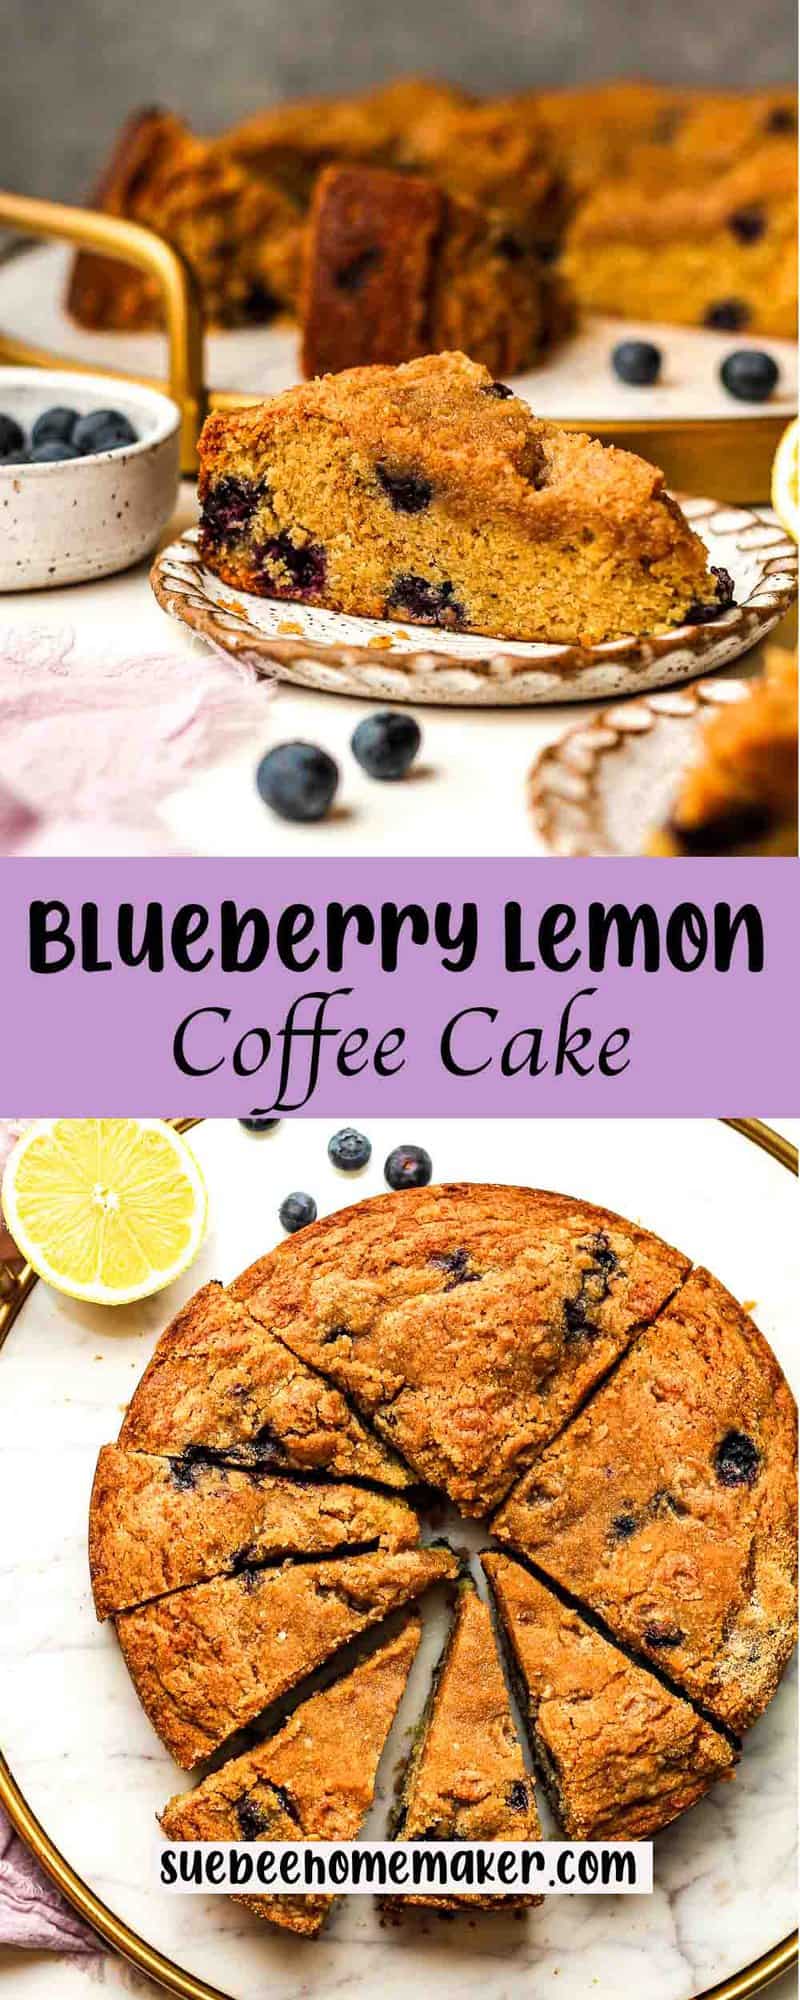 A collage of blueberry lemon coffee cake photos.